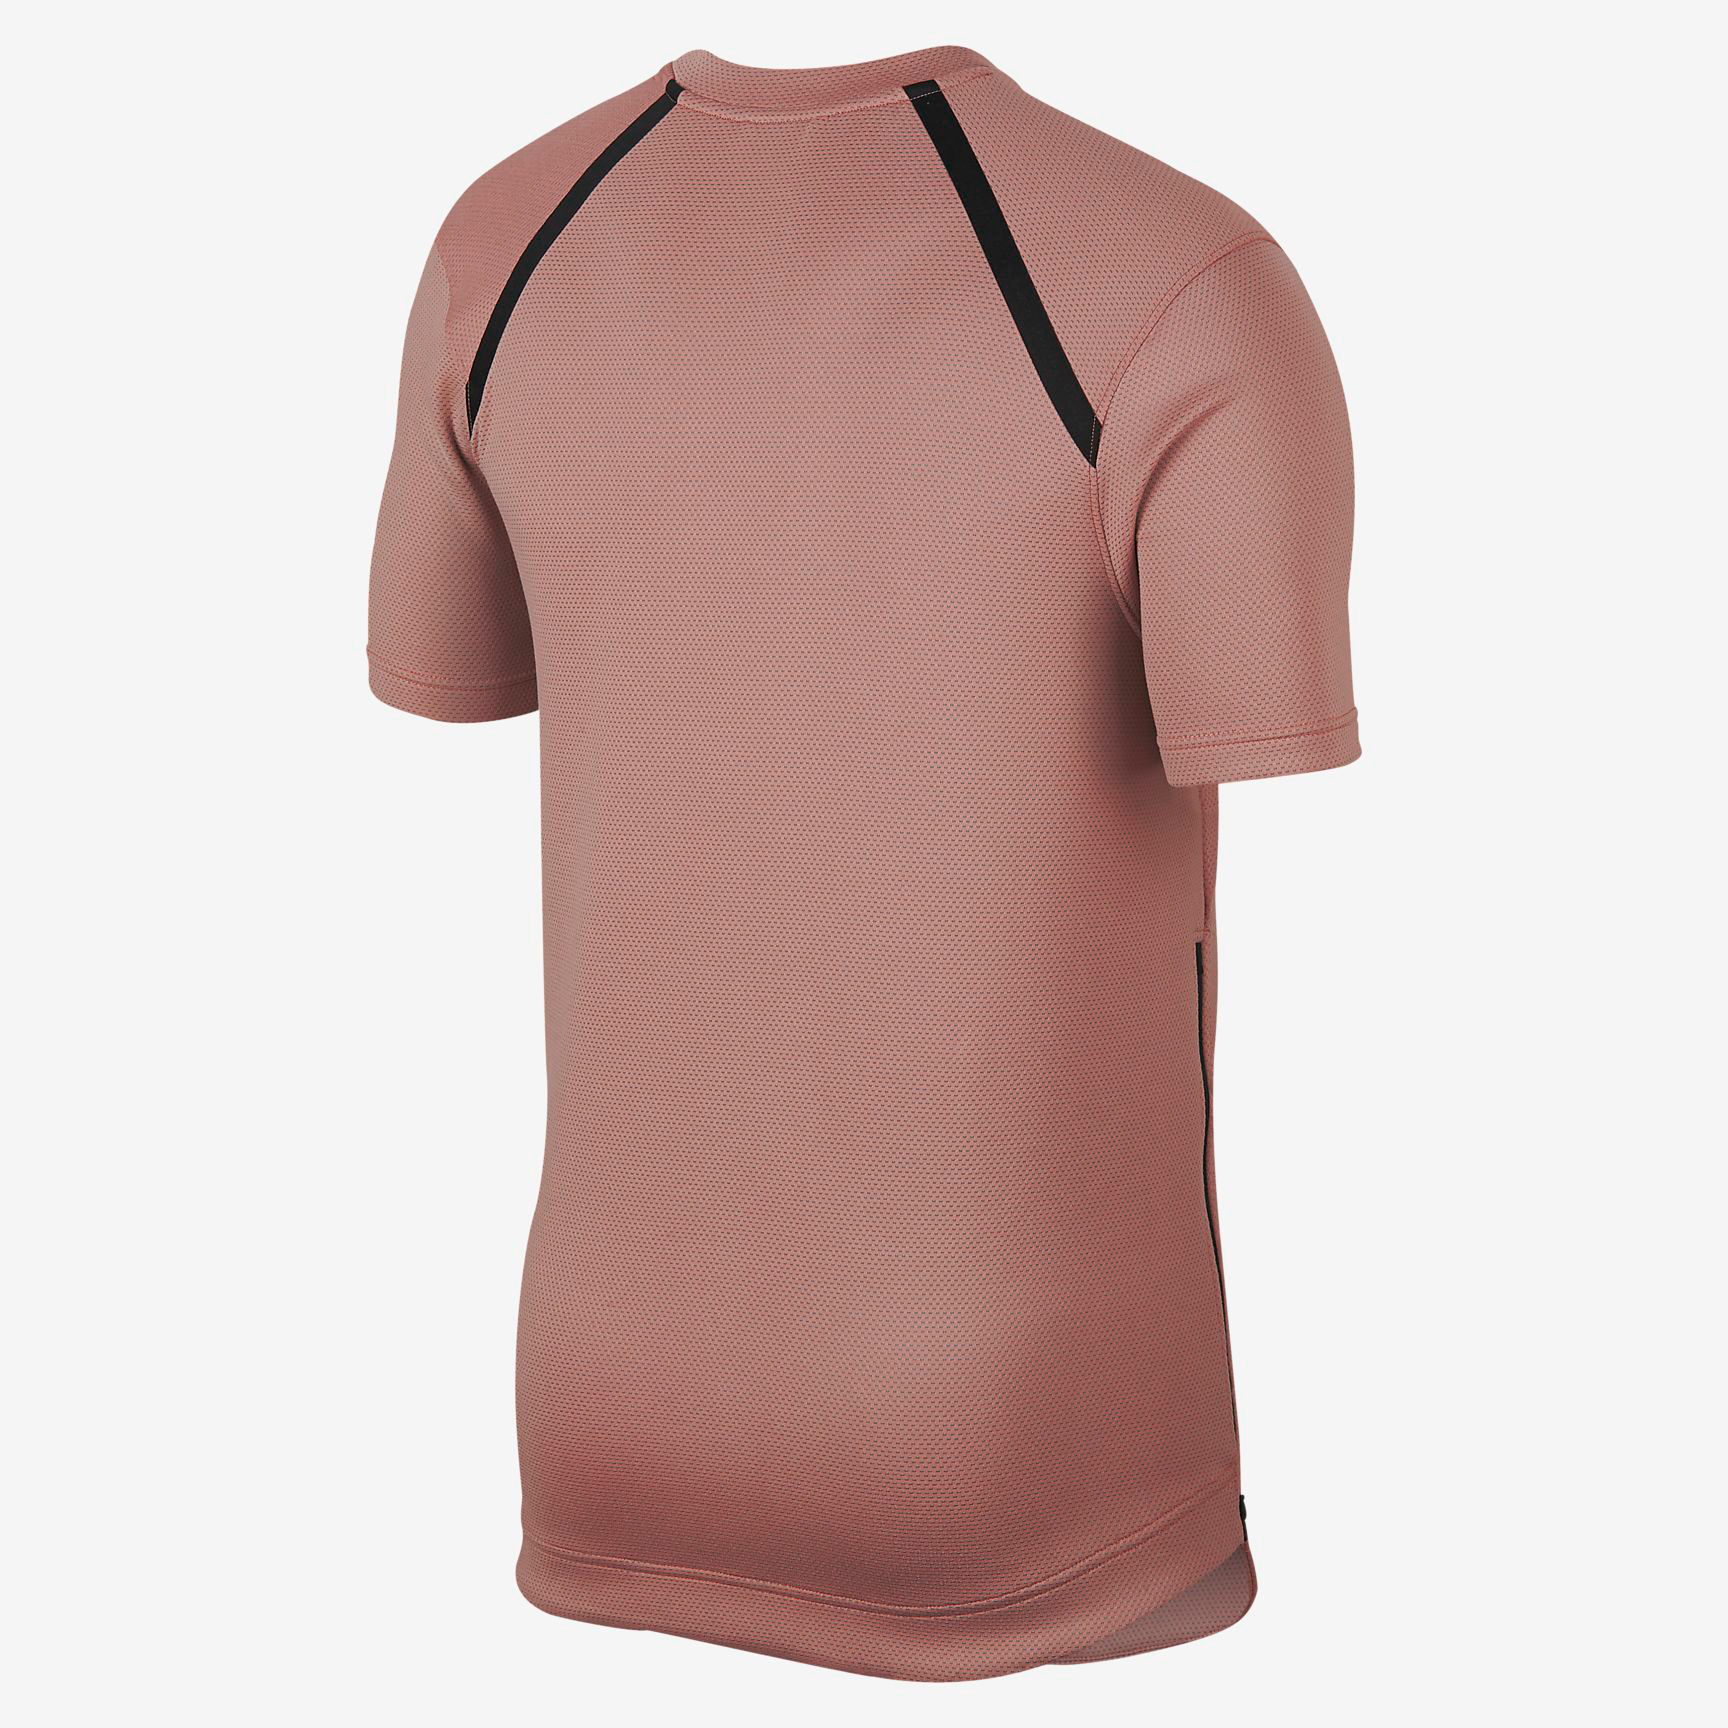 nike-air-foamposite-one-foamposite-rust-pink-shirt-match-2